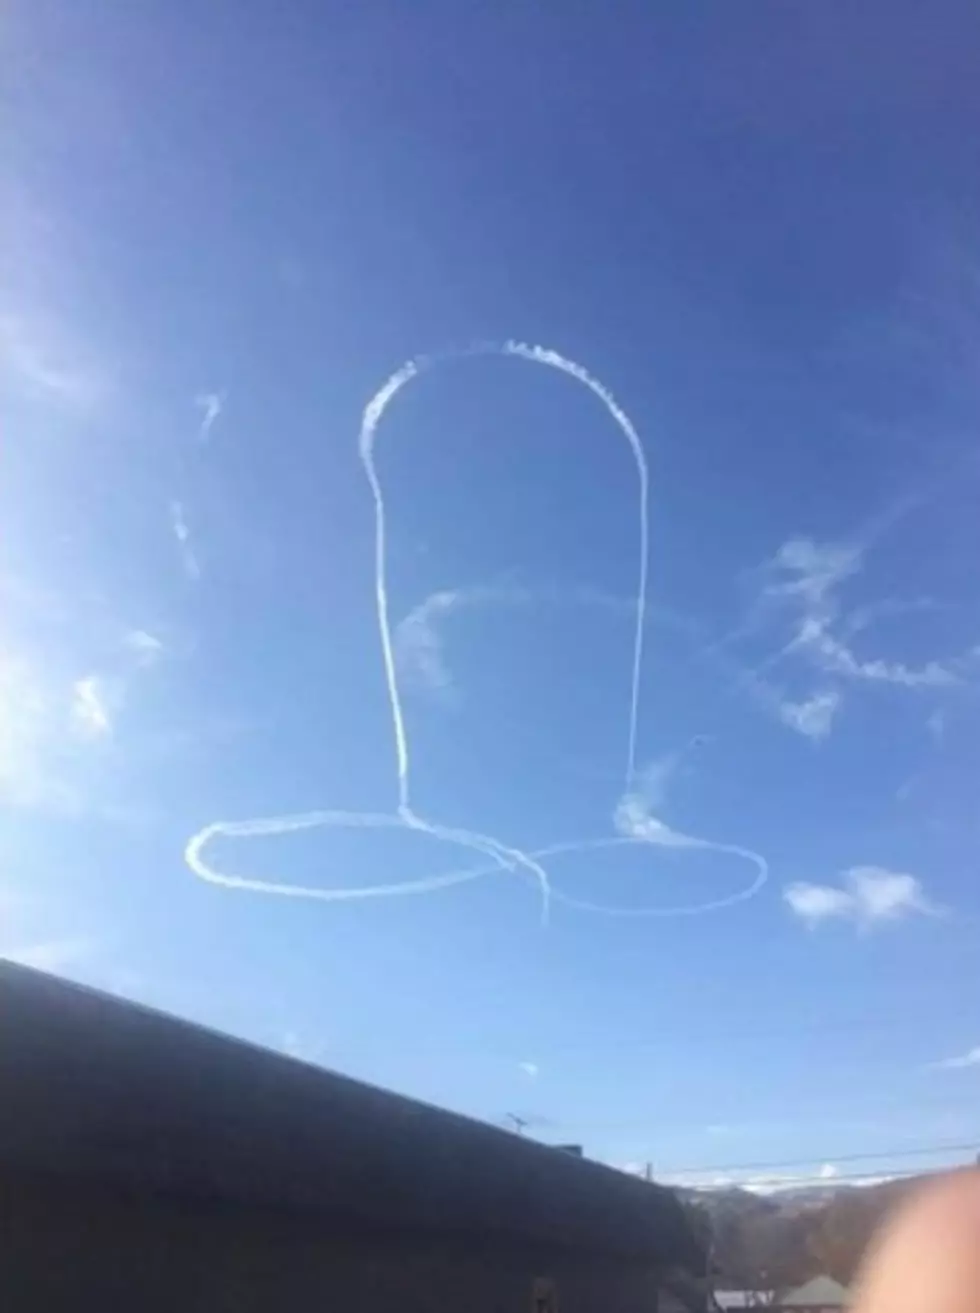 Navy Pilot Skydraws Penis Over Washington [GRAPHIC]